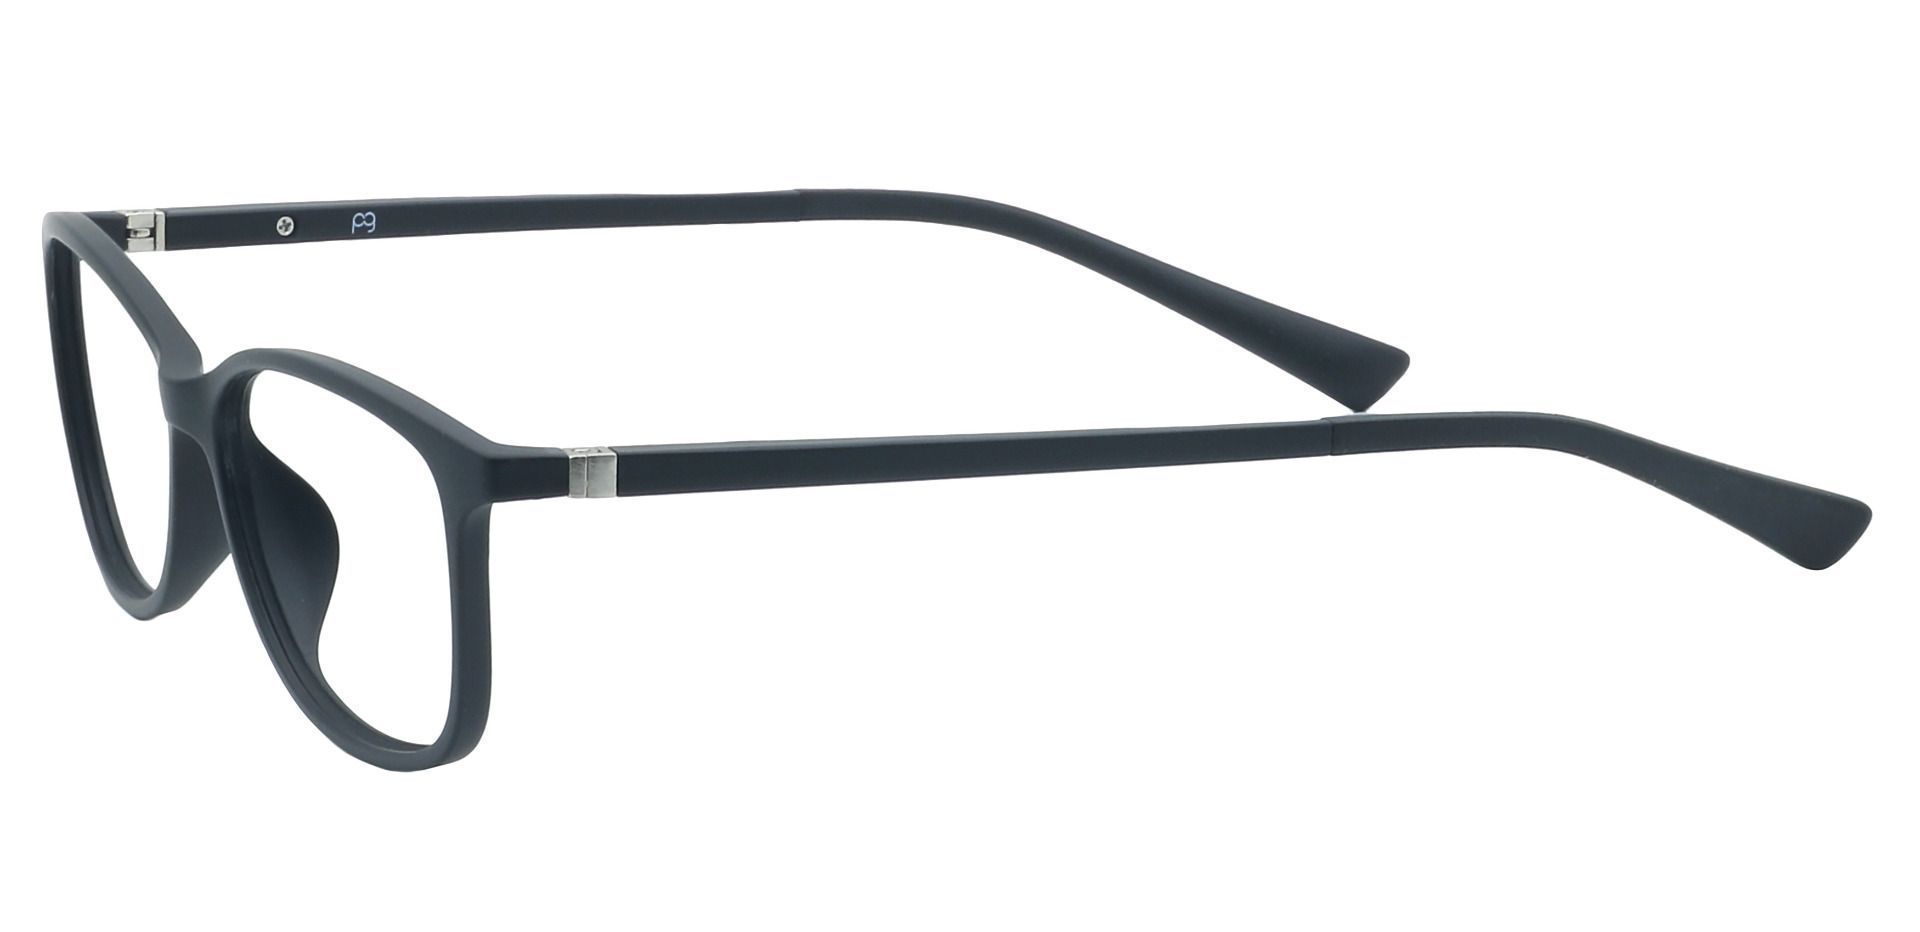 Nia Oval Progressive Glasses - Black